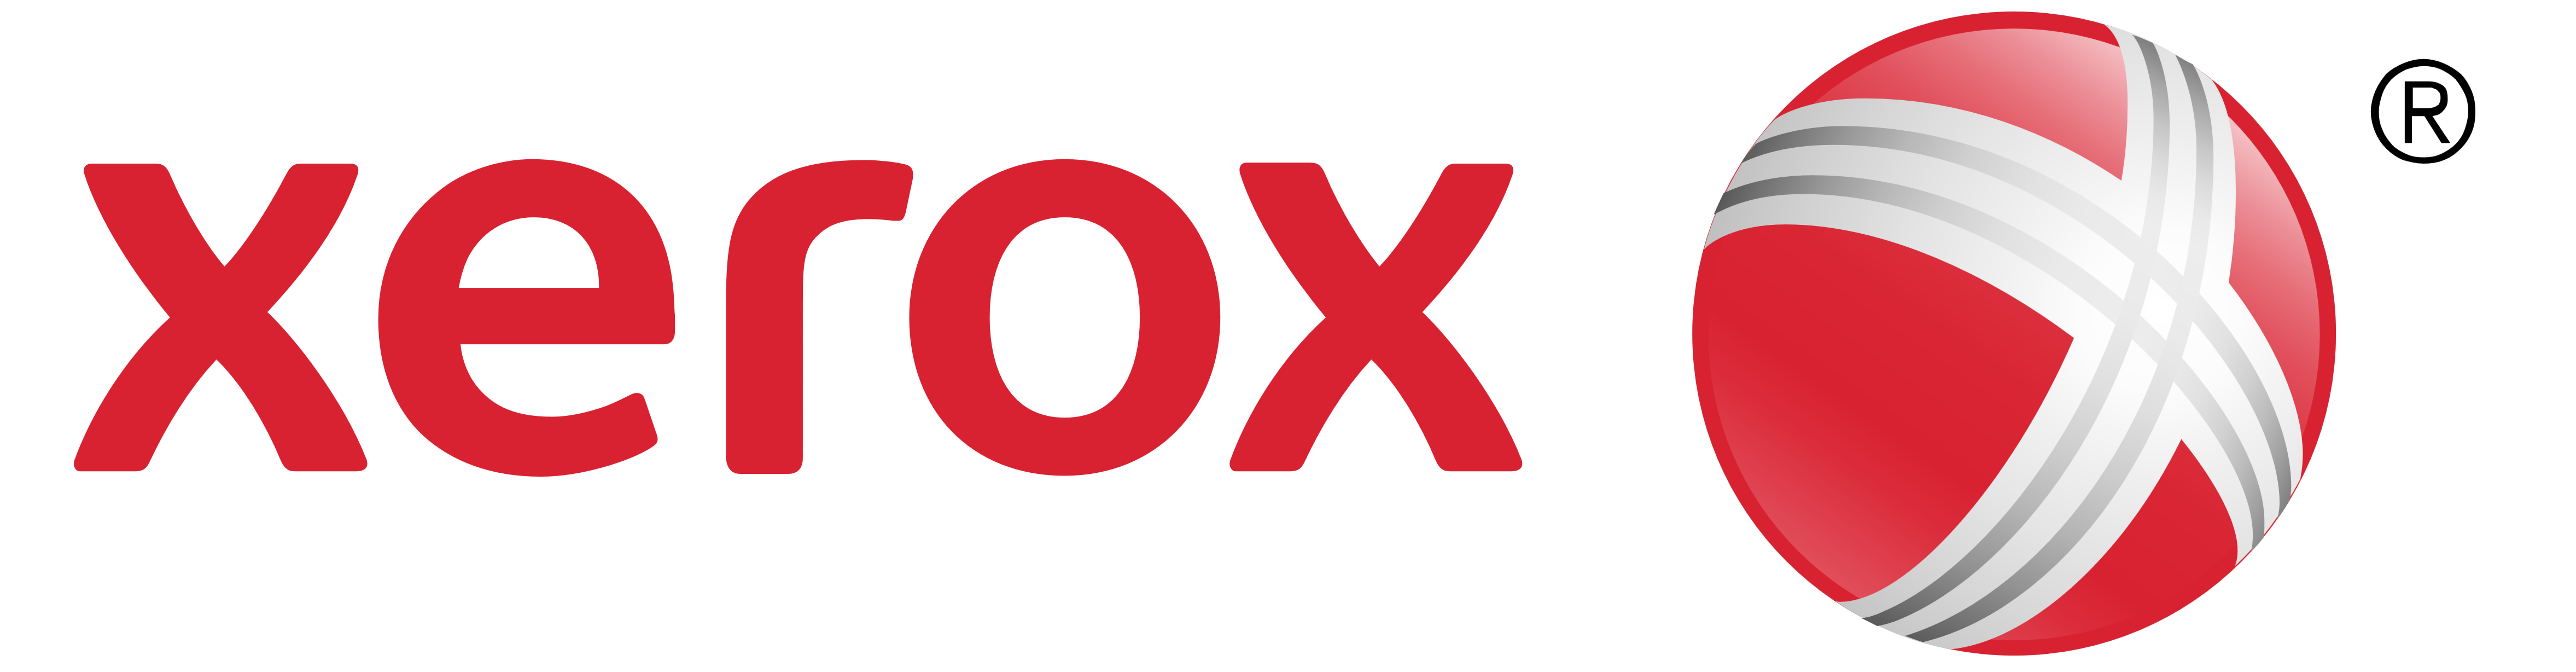 Xerox – Logos Download